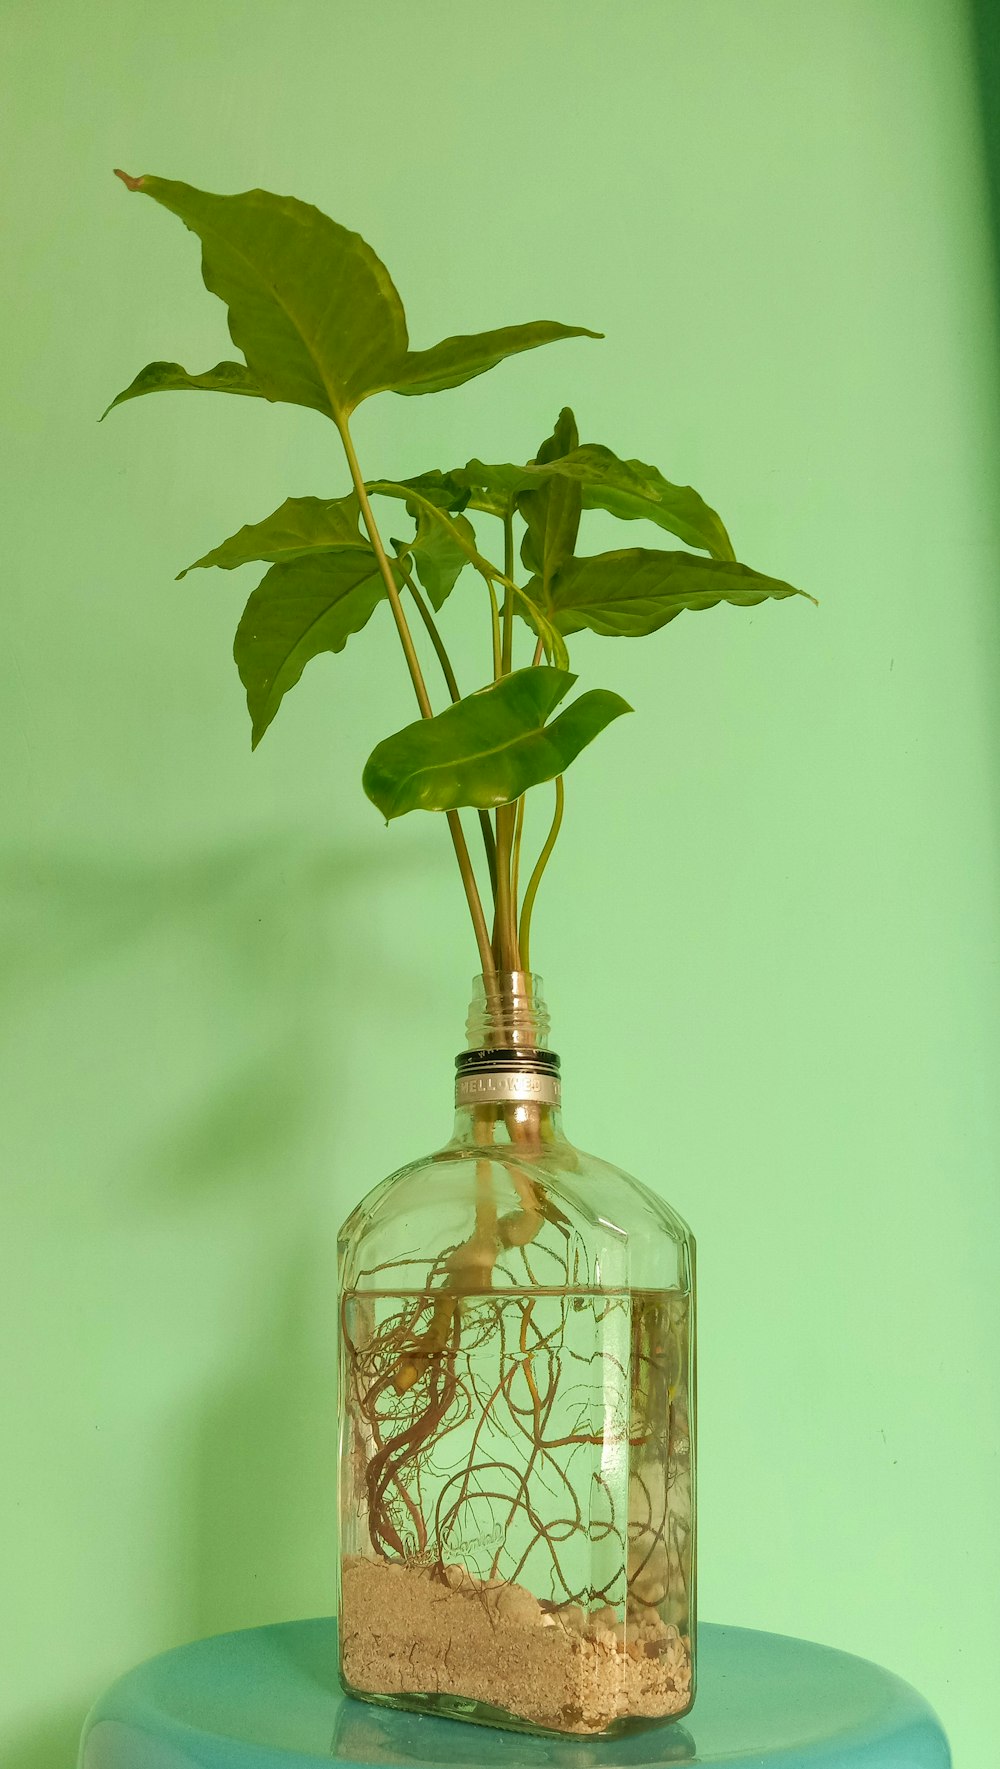 green plant in clear glass bottle